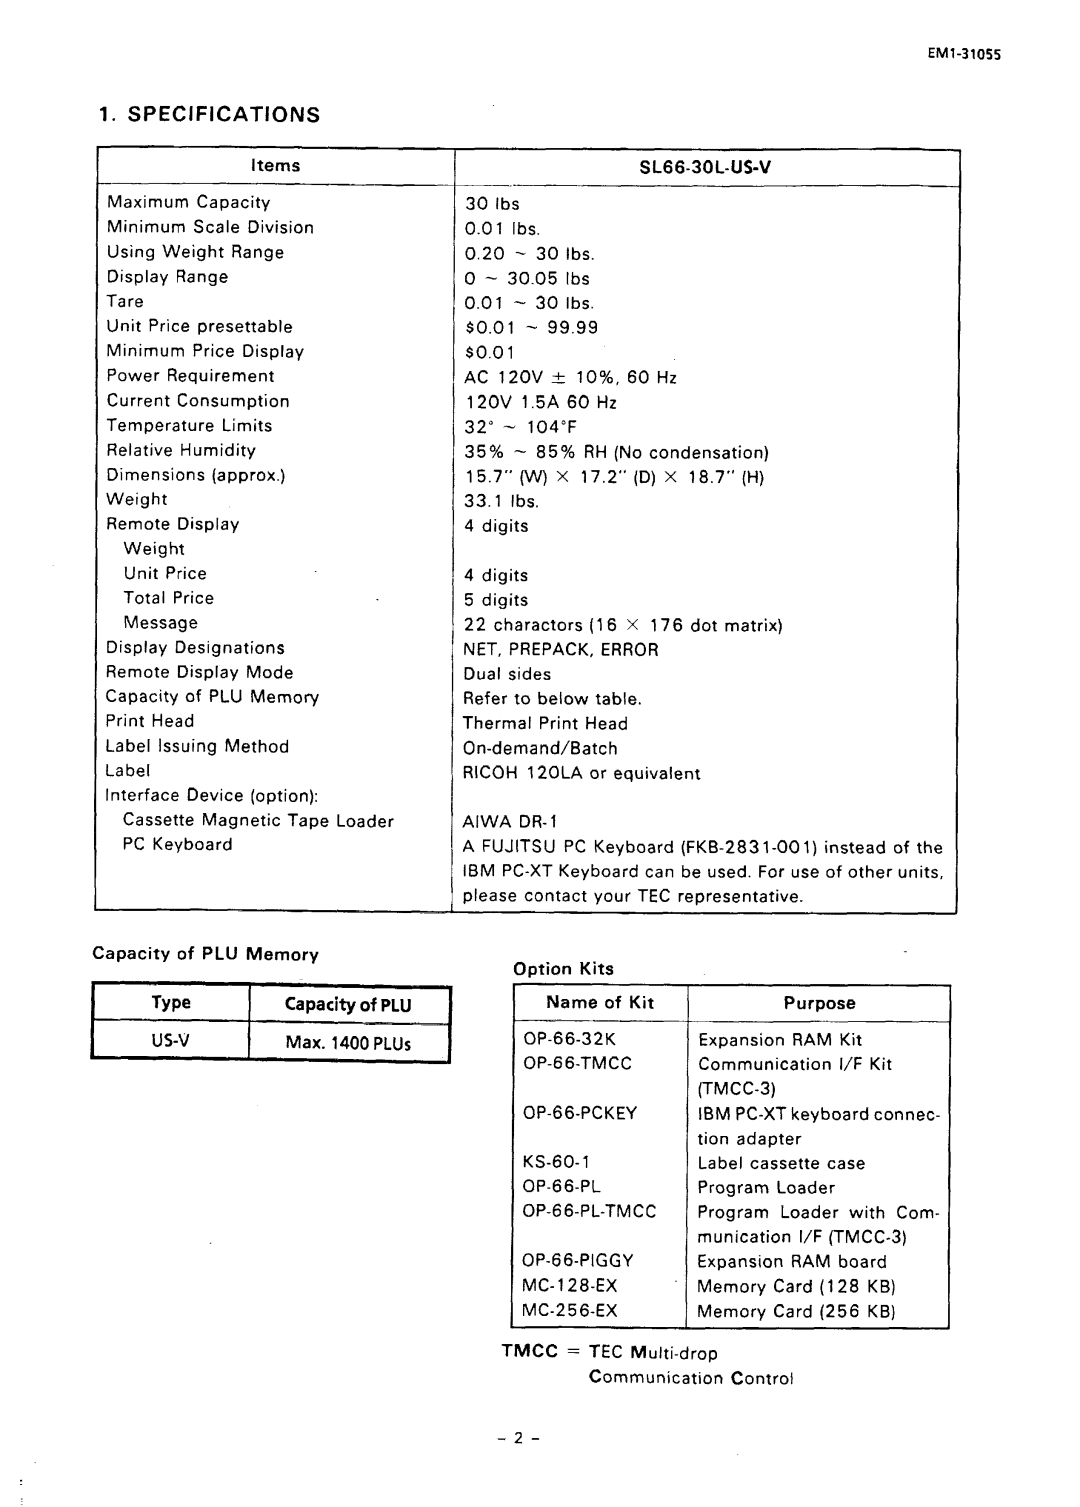 Toshiba EMl-31055, SL66 SERIES manual Specjfications 